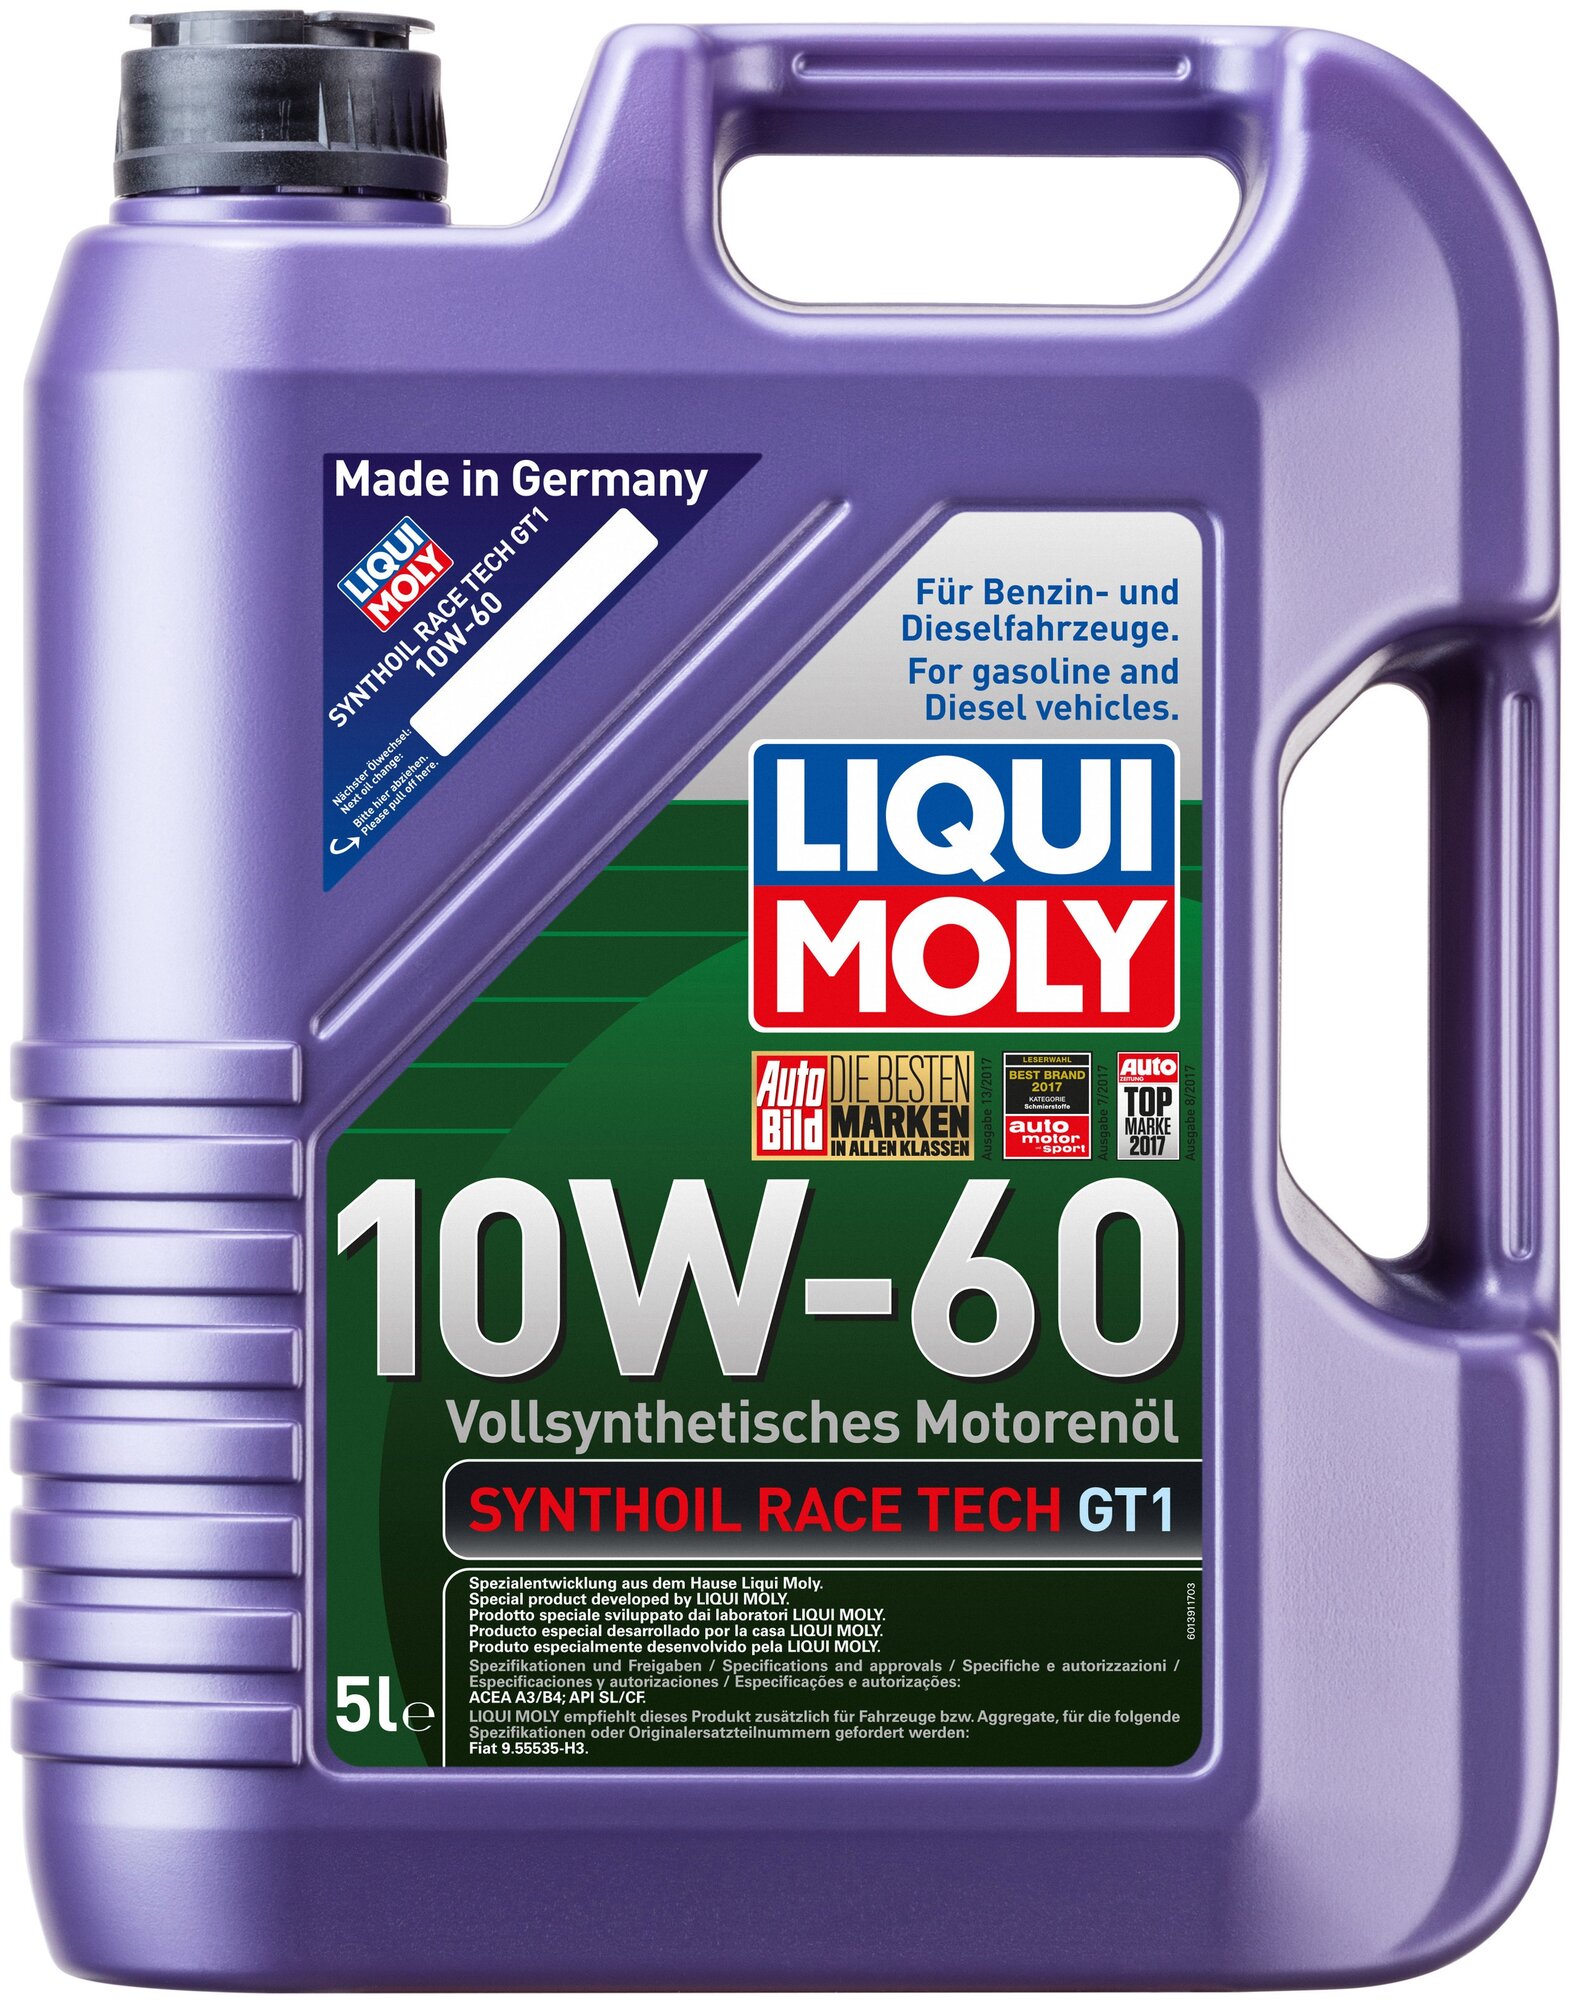 Полусинтетическое моторное масло LIQUI MOLY Synthoil Race Tech GT1 10W-60